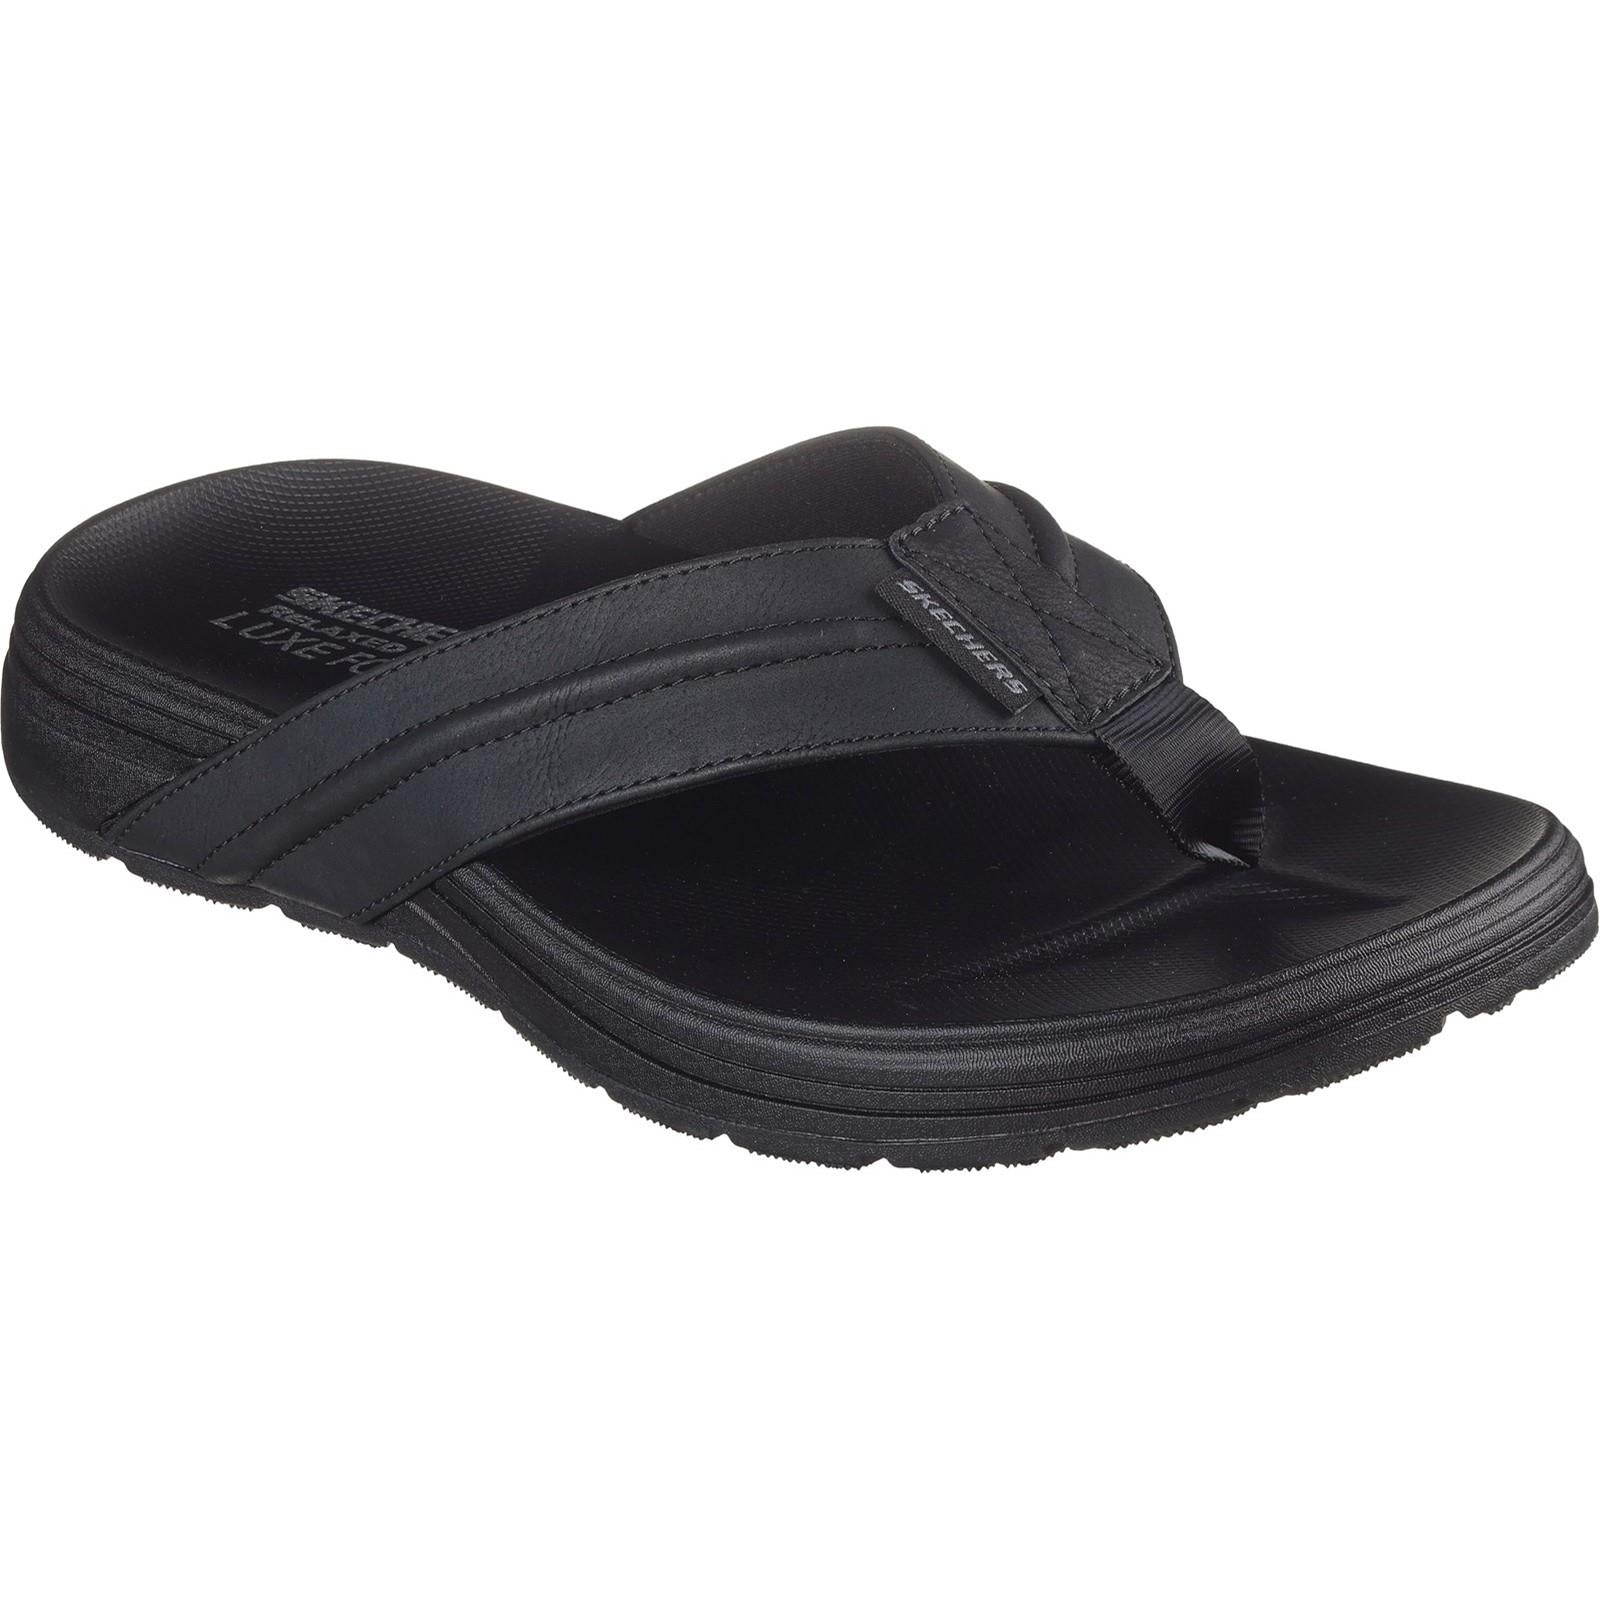 Skechers Patino Marlee black summer flip flop sandals #205111